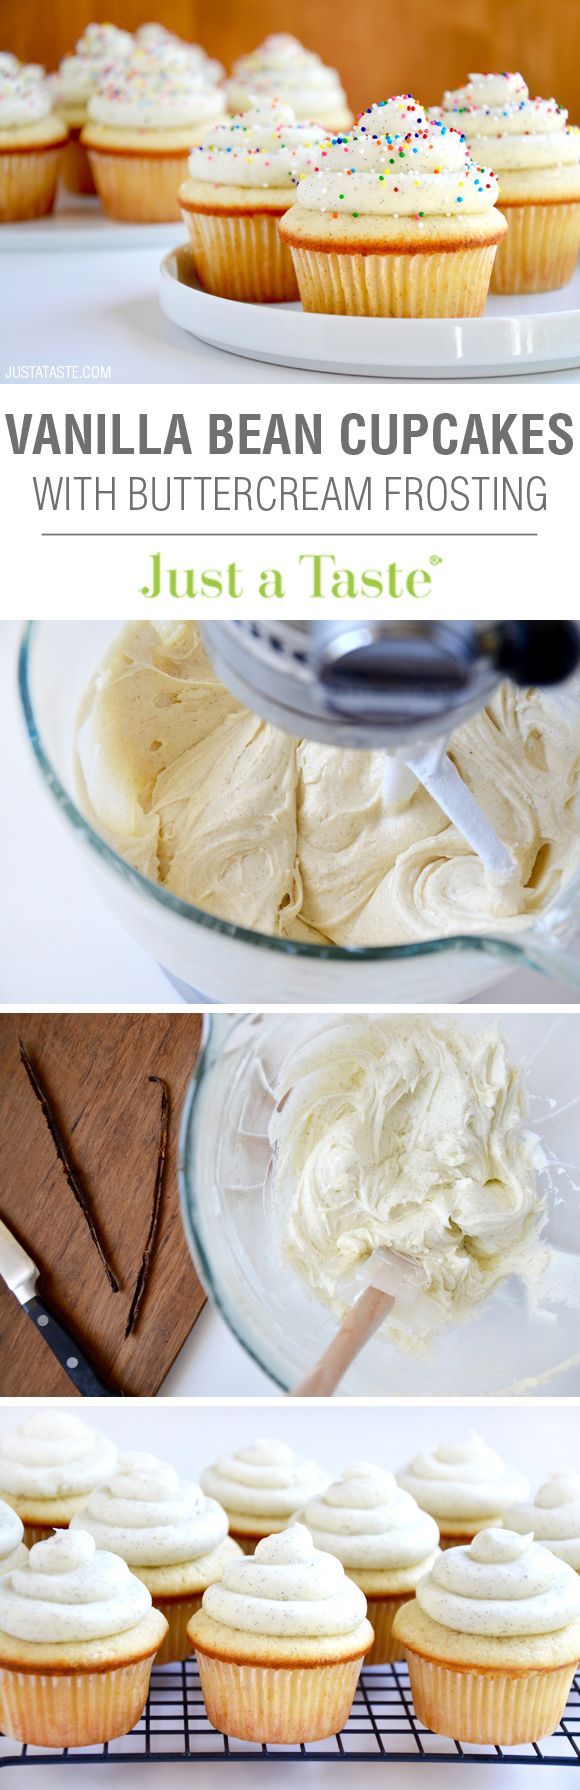 Vanilla Bean Cupcakes with Buttercream Frosting recipe via justataste.com